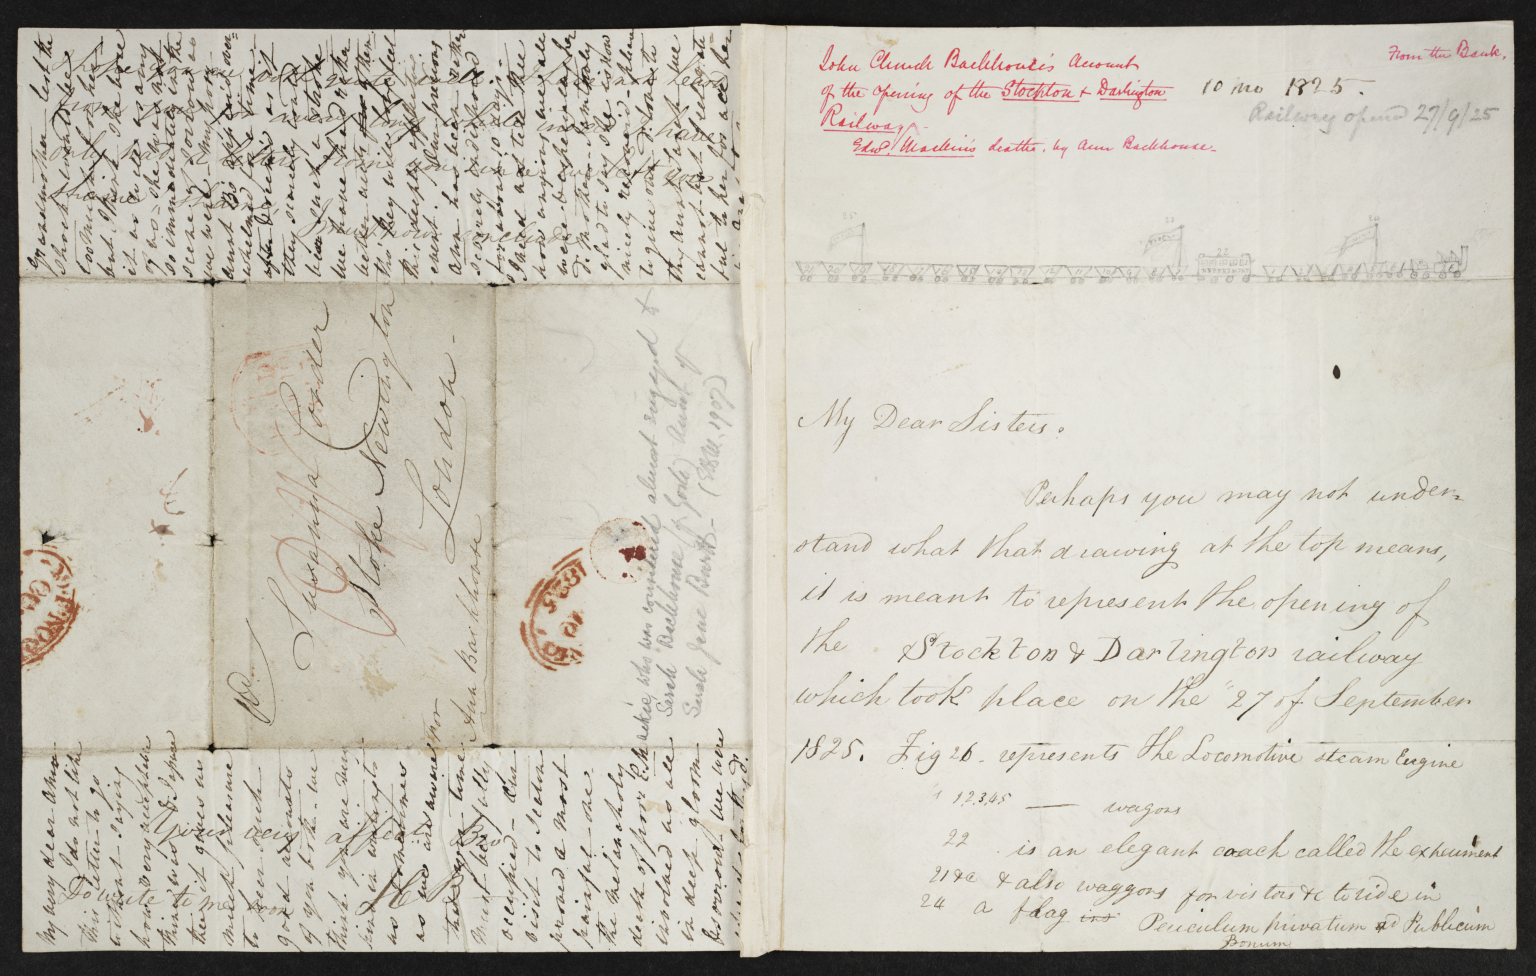 John Backhouse letter at the National Railway Museum